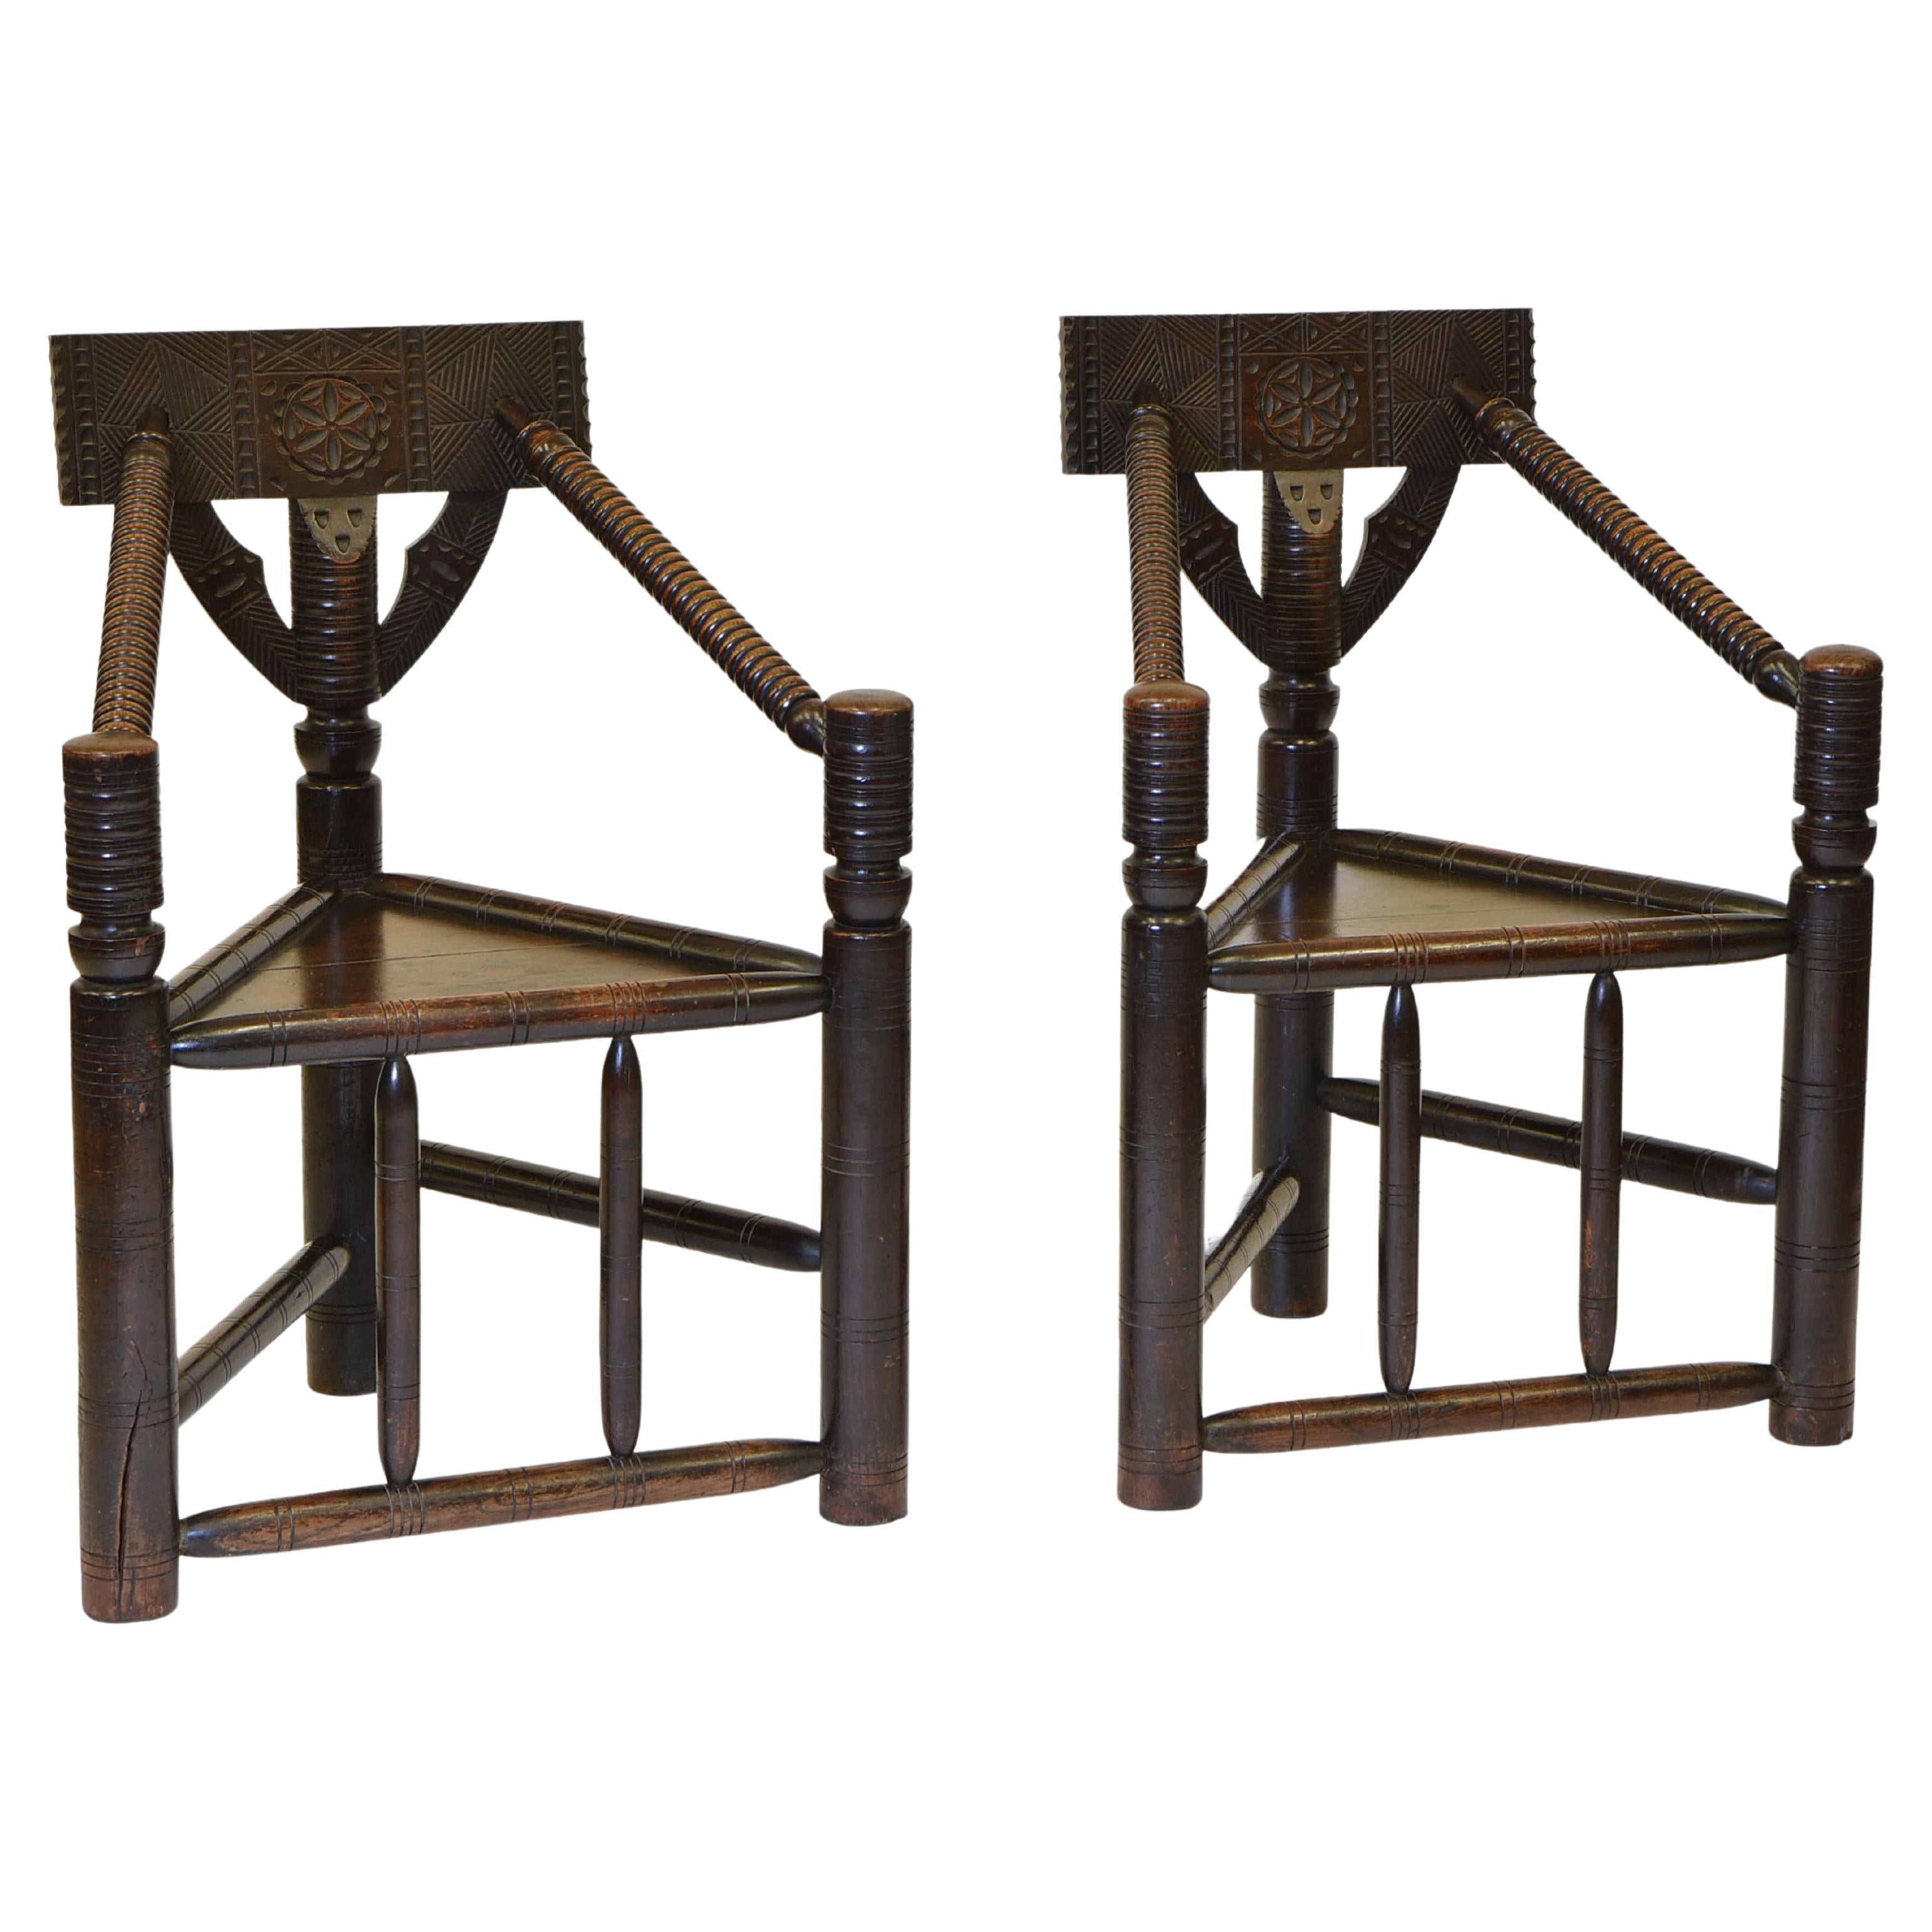 Pair 19th Century Oak Early English Manner Turner's Three Legged Chairs